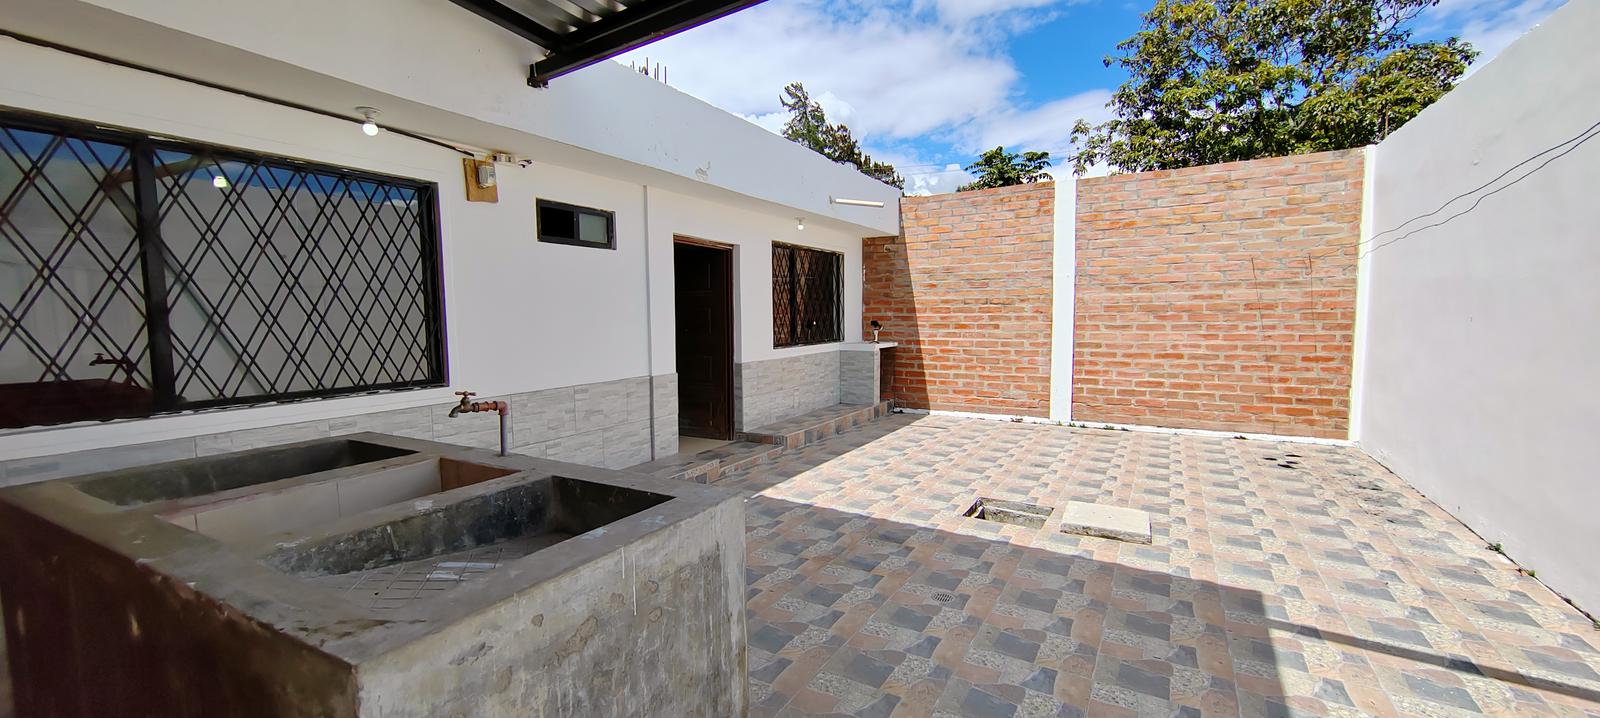 Casa en Venta en Tumbabiro a 5 min de Urcuqui